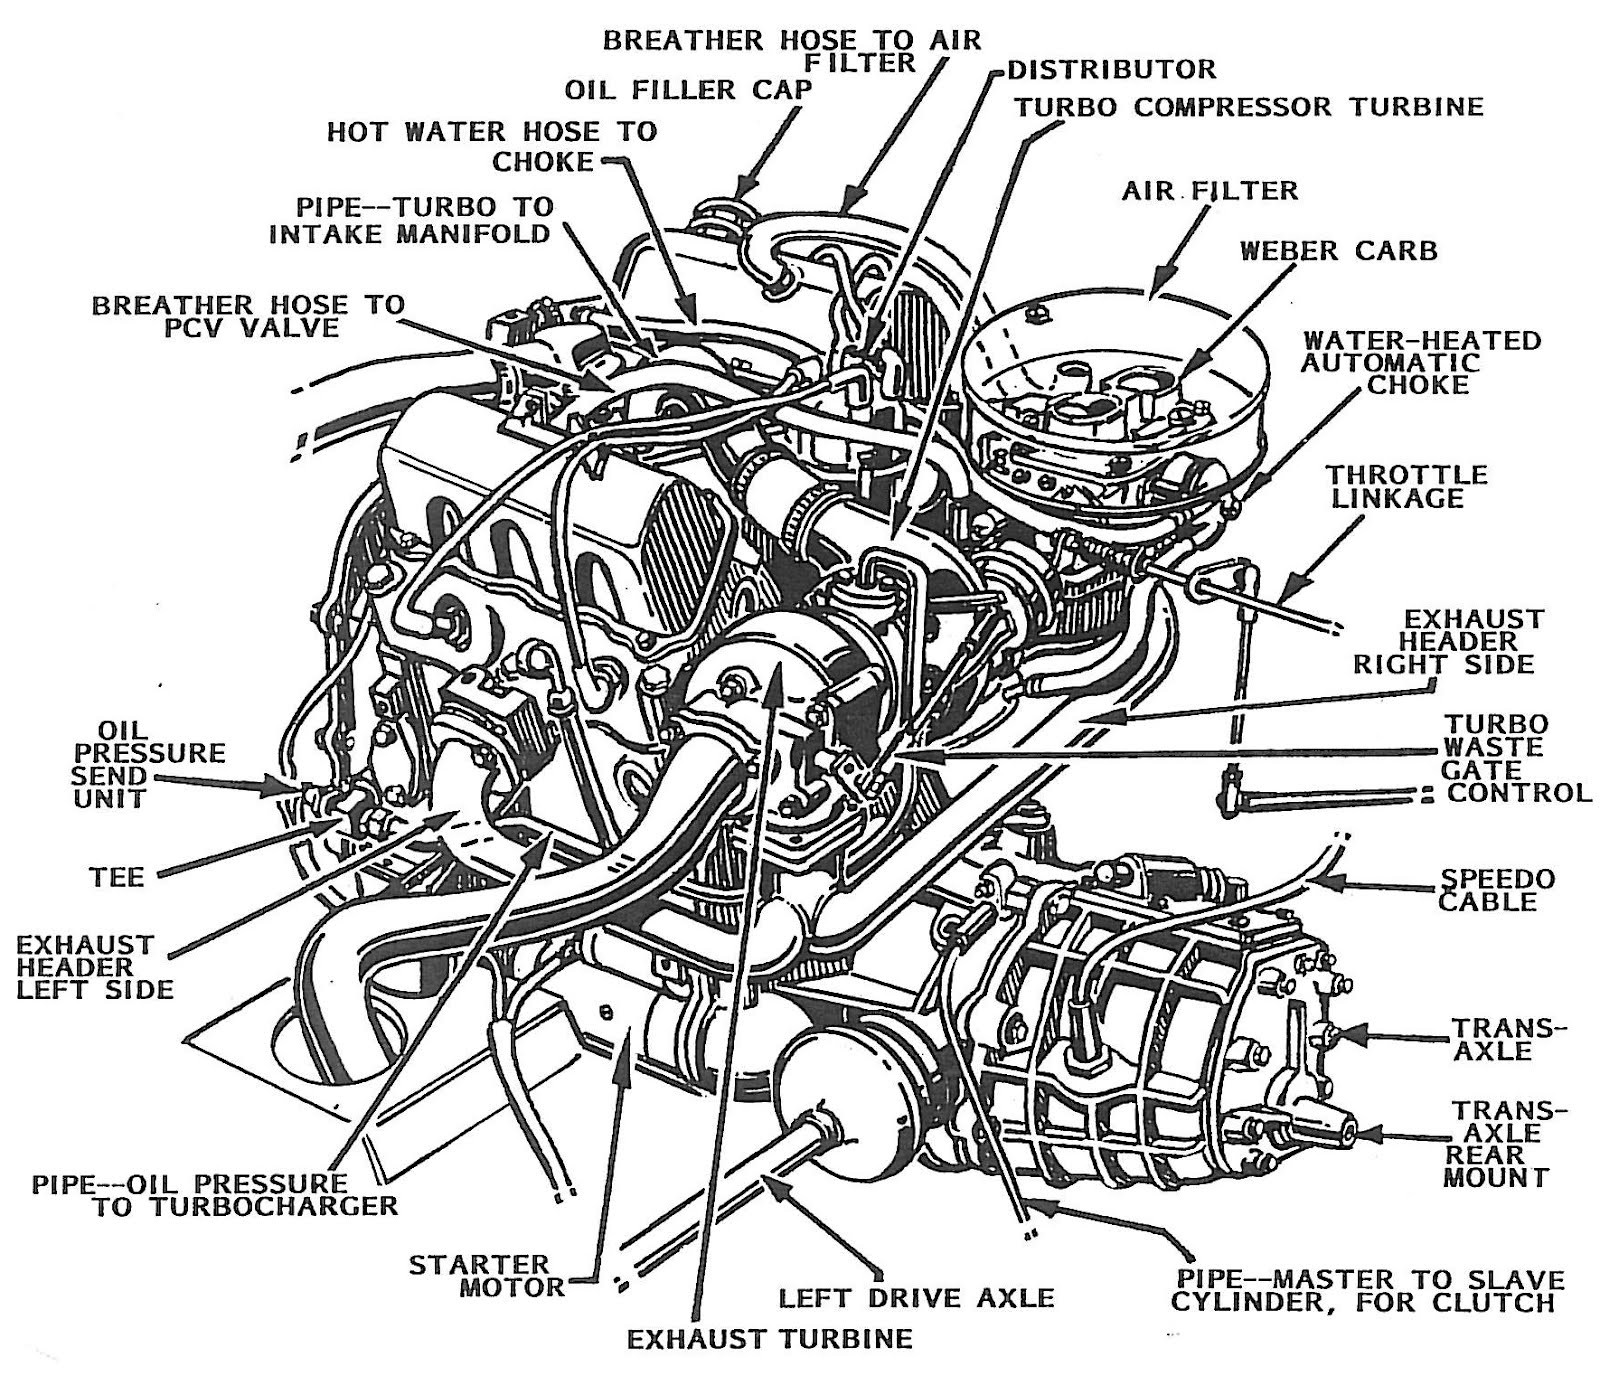 93 Honda Accord Engine Diagram 1985 Honda Accord Axle Diagram Wiring Schematic Wiring Schematic Of 93 Honda Accord Engine Diagram